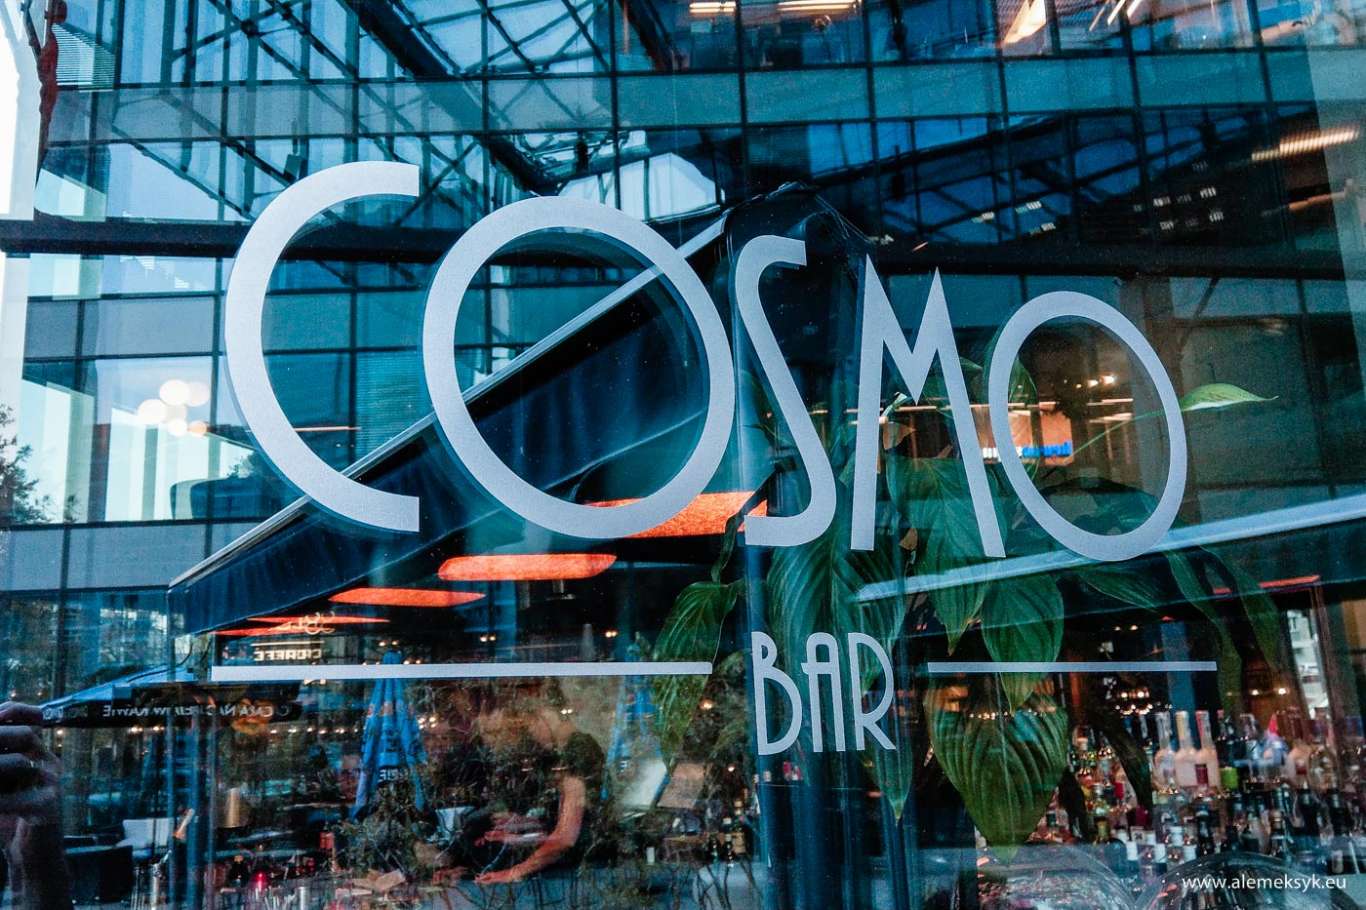 Cosmo bar